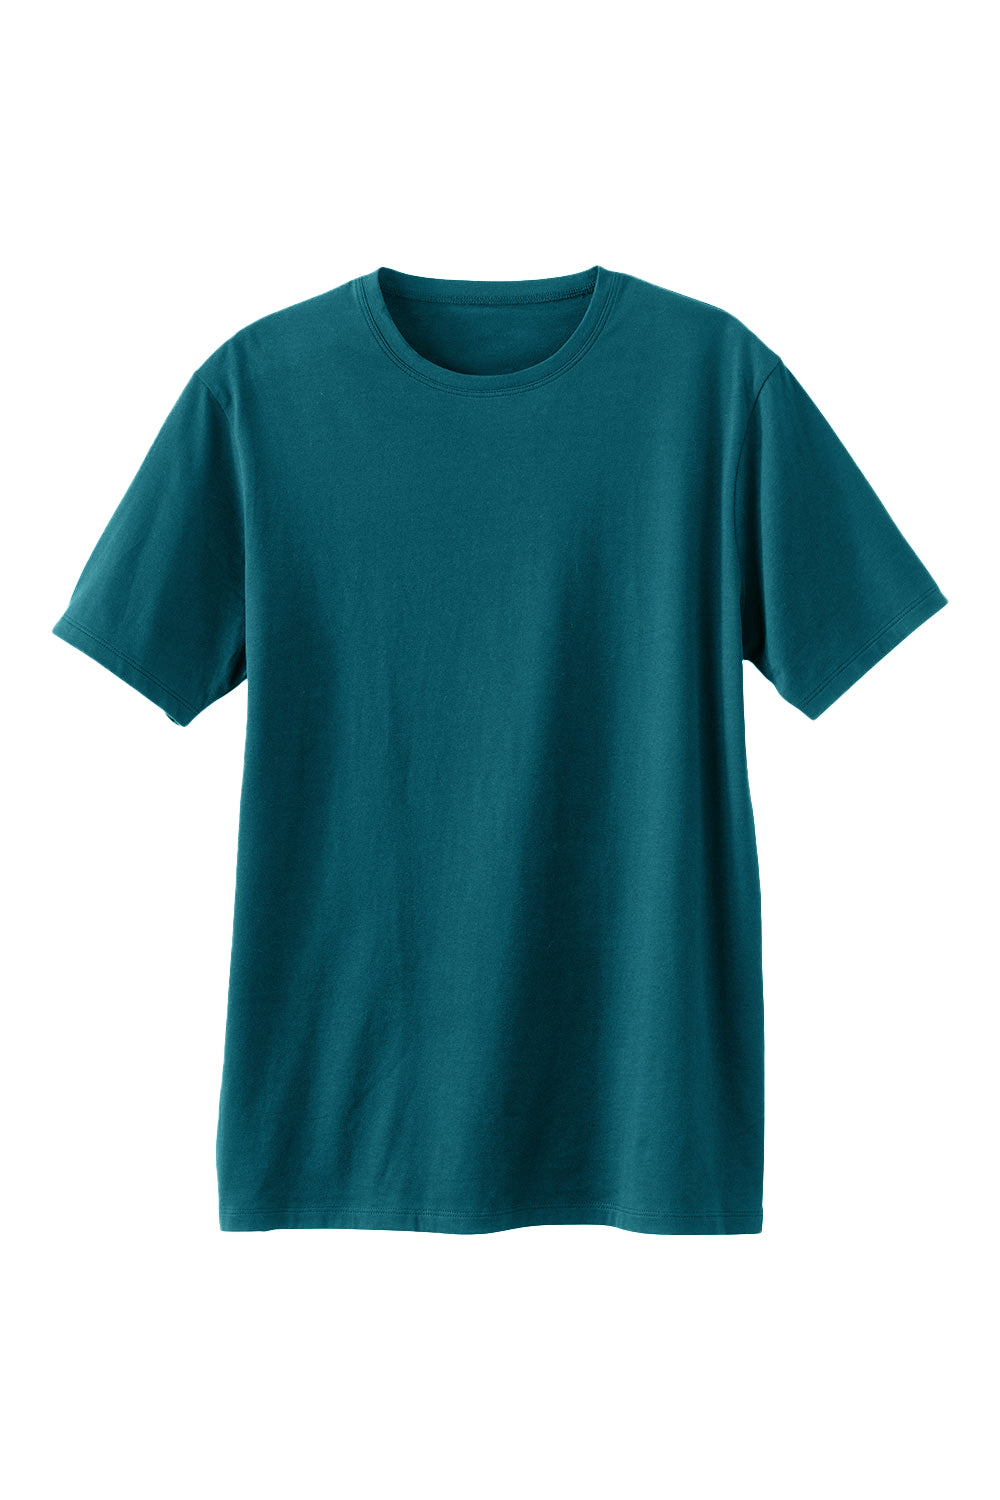 Male Promotional Pure Cotton T Shirt - 100% Cotton at Rs 180/piece